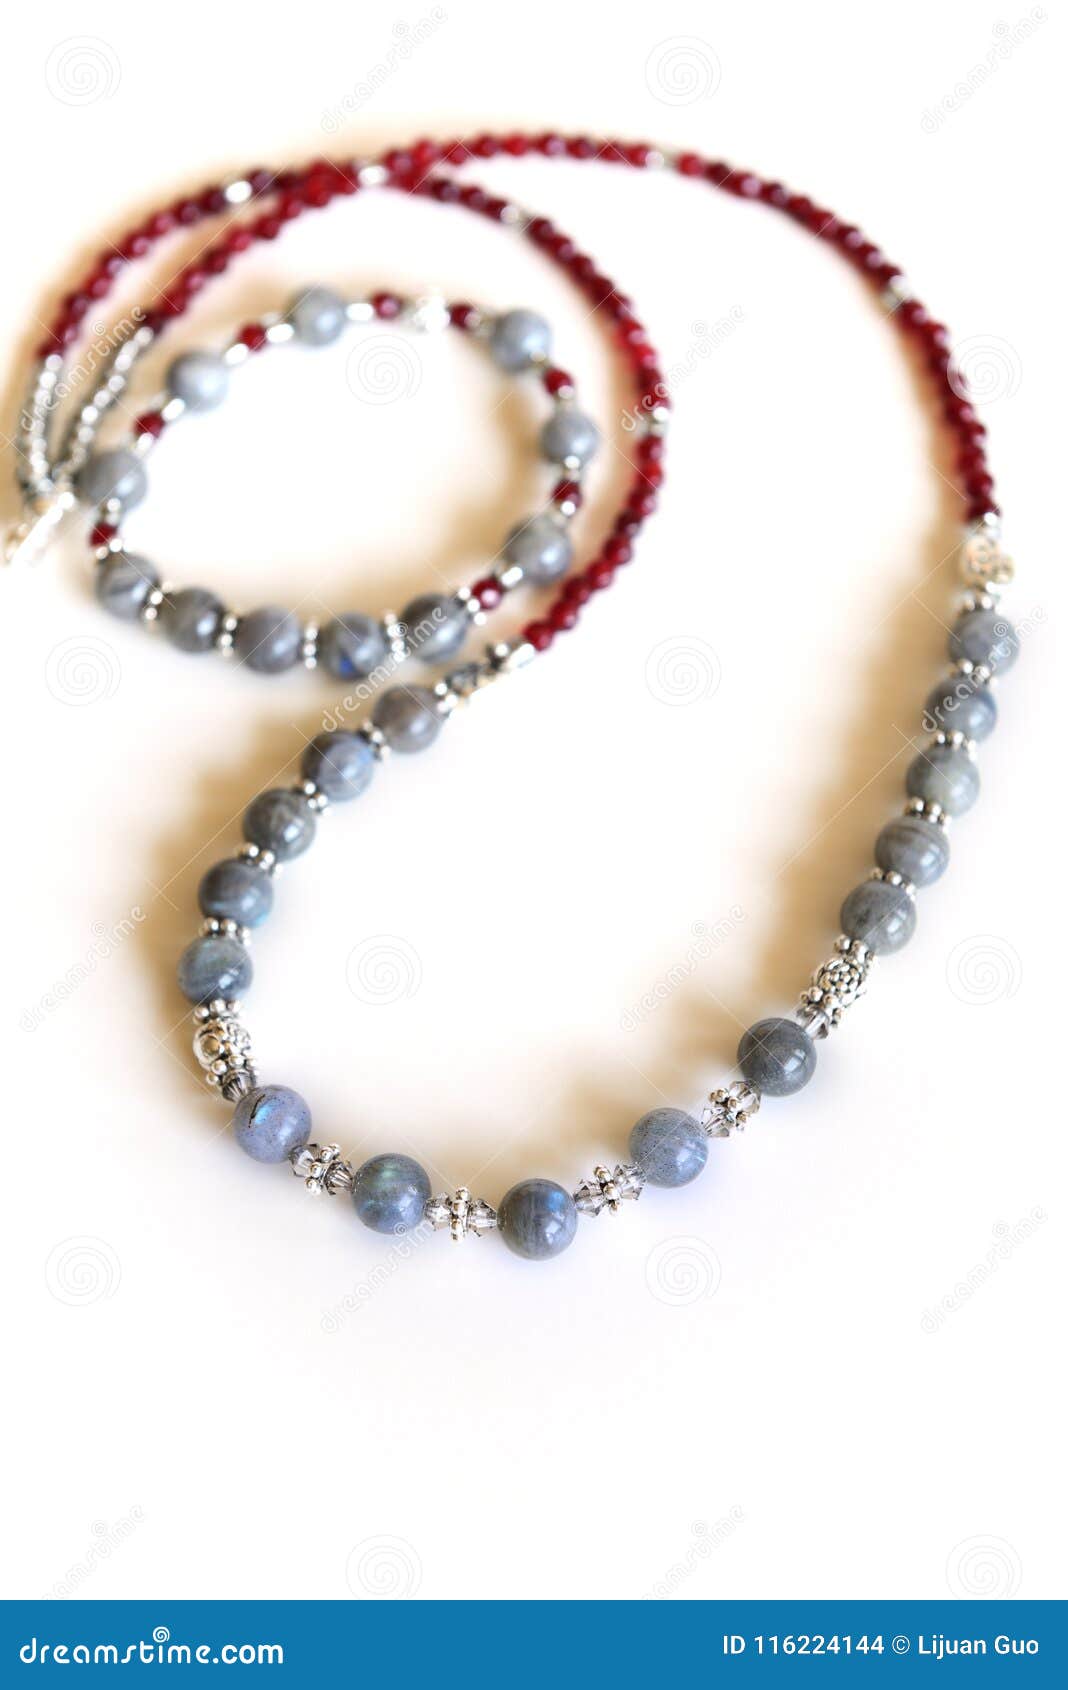 Labradorite and Wine Red Garnet Gemstone Necklace Stock Photo - Image ...